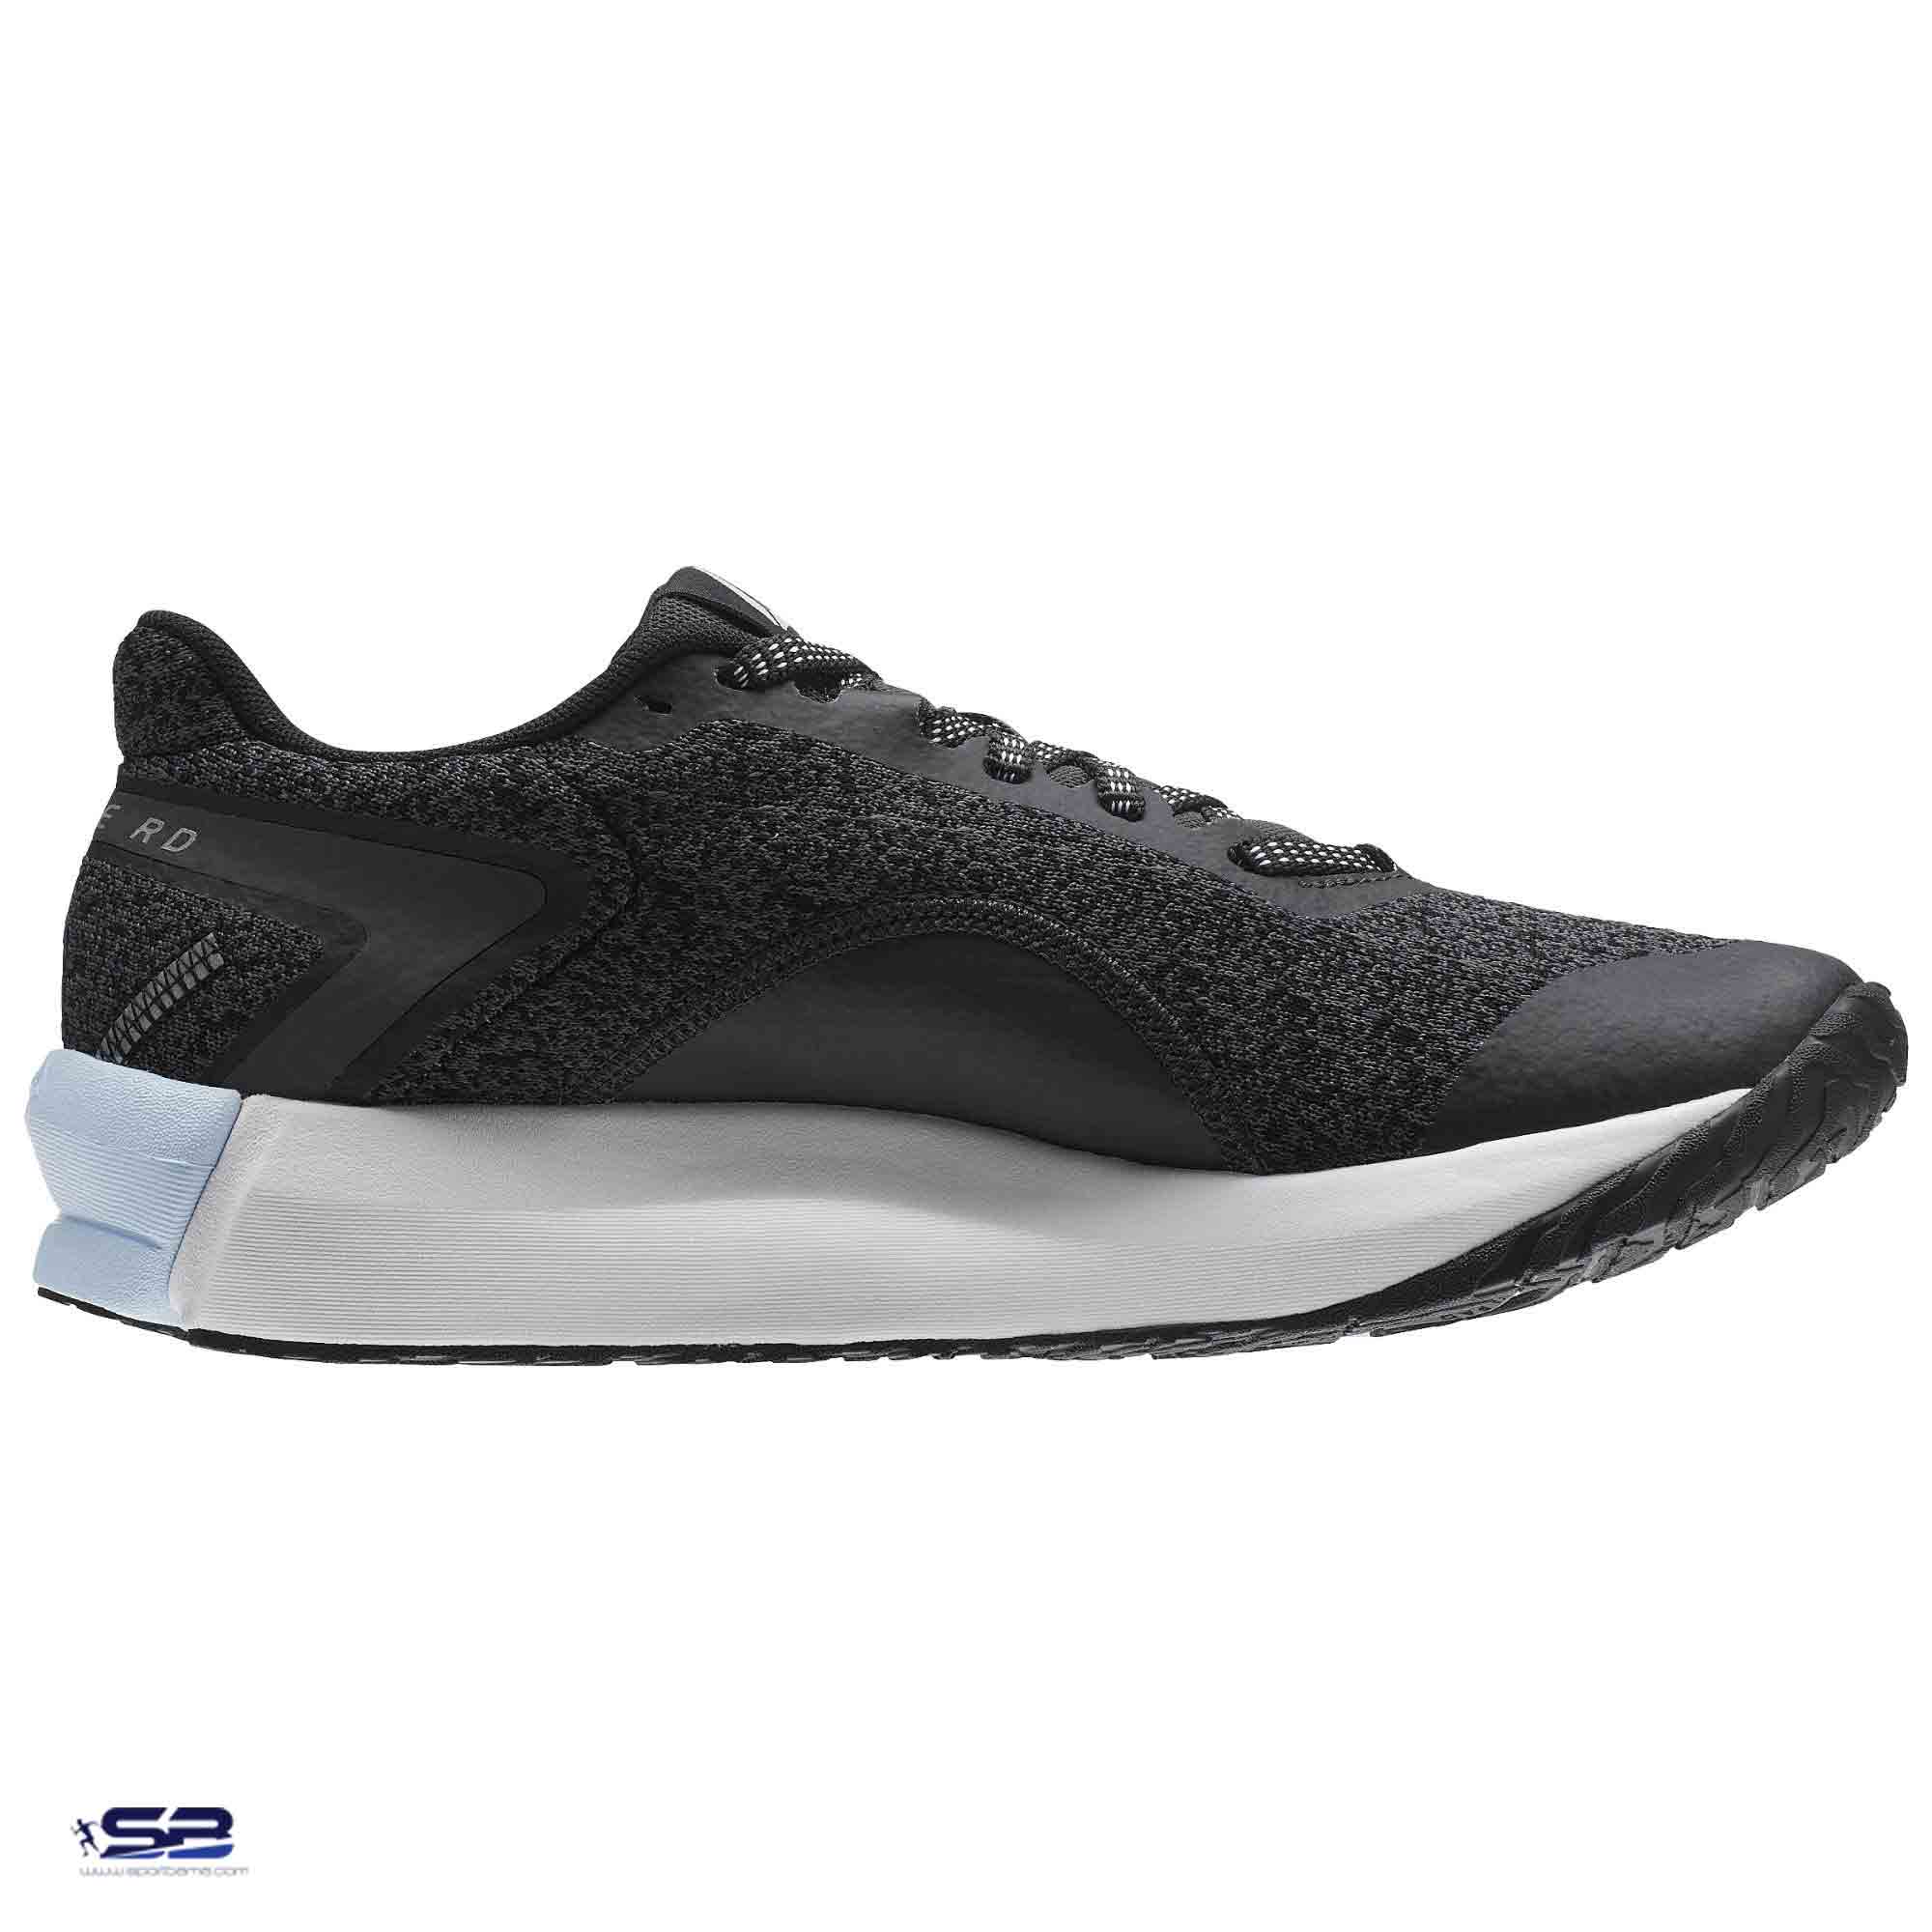  خرید  کفش کتانی اورجینال ریباک     Reebok Running Shoes BS8597  